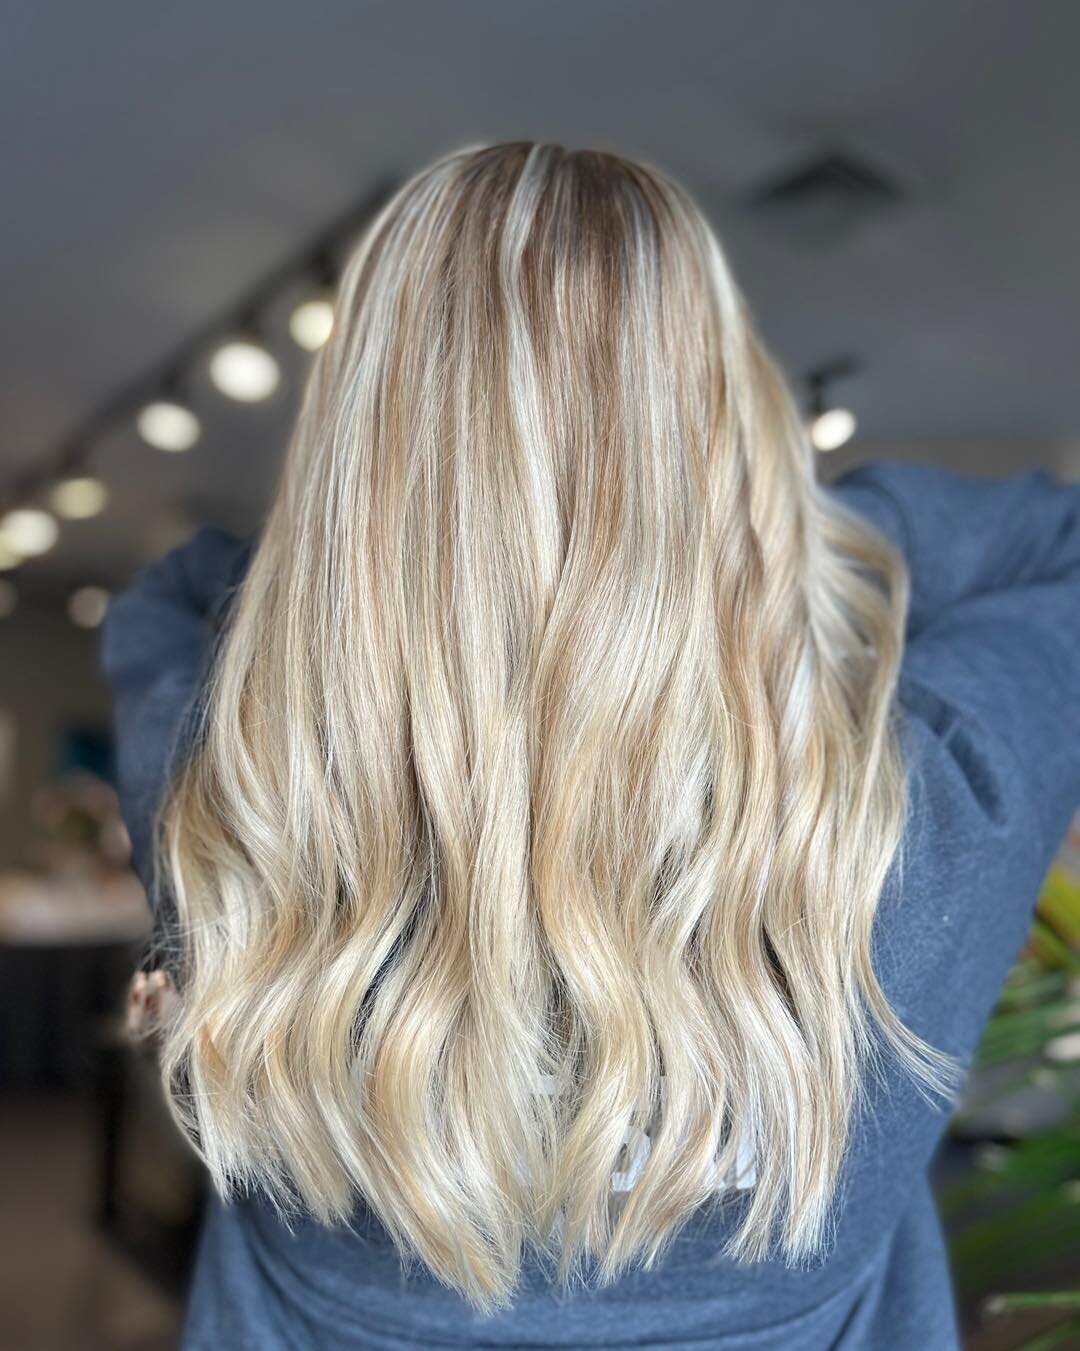 Gorgeous dimensional Blonde by @hairbycaseyyy 

#balayagespecialist 
#330stylist 
#euforapro 
#euforastyle 
#blondehighlights 
#eufora 
#euforasalon 
#medinaohio 
#blondespecialist 
#euforahaircare